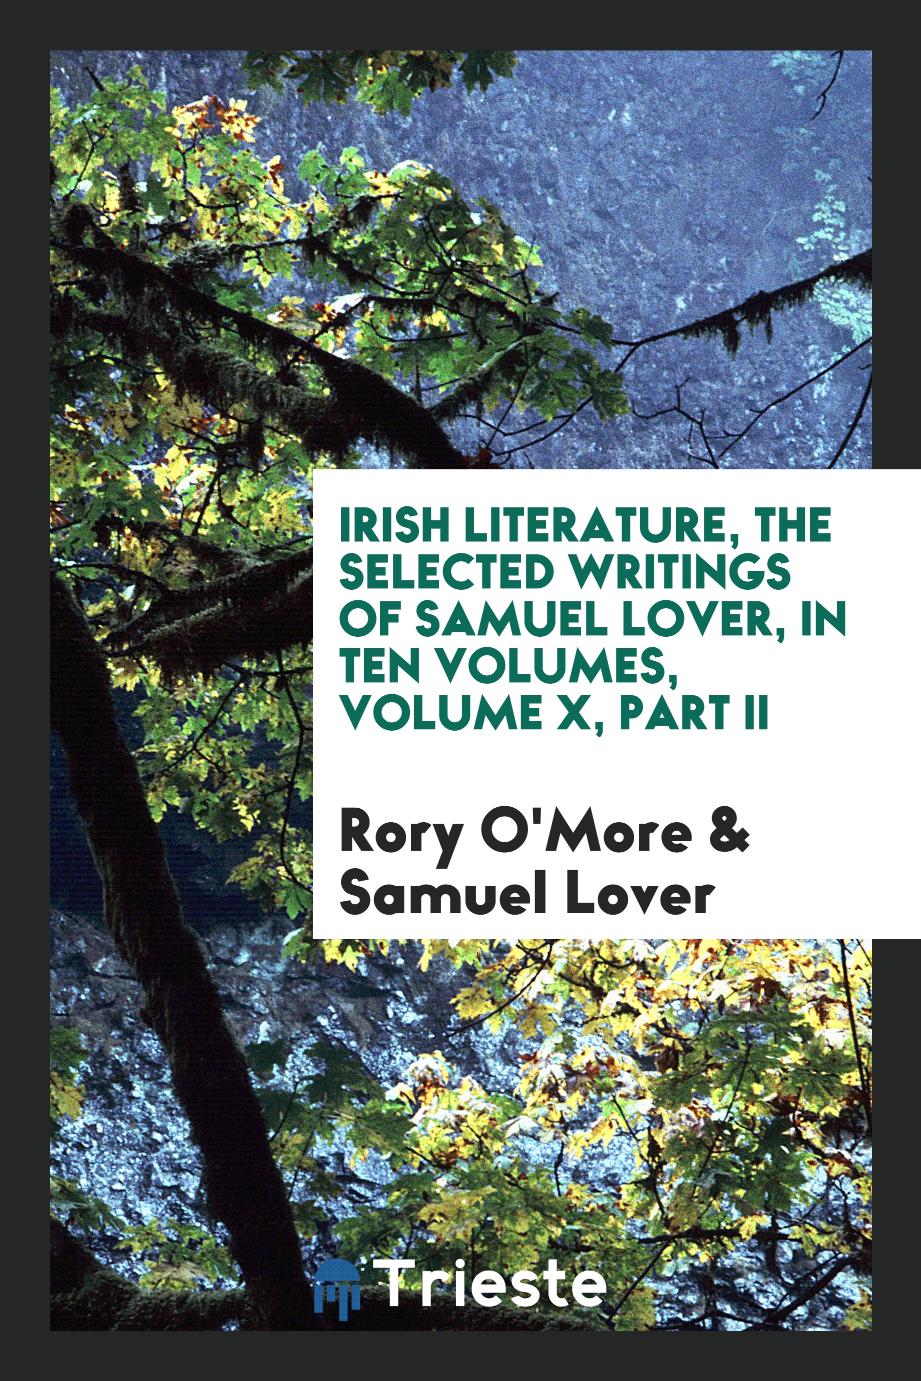 Irish literature, the selected writings of Samuel Lover, in Ten Volumes, Volume X, Part II